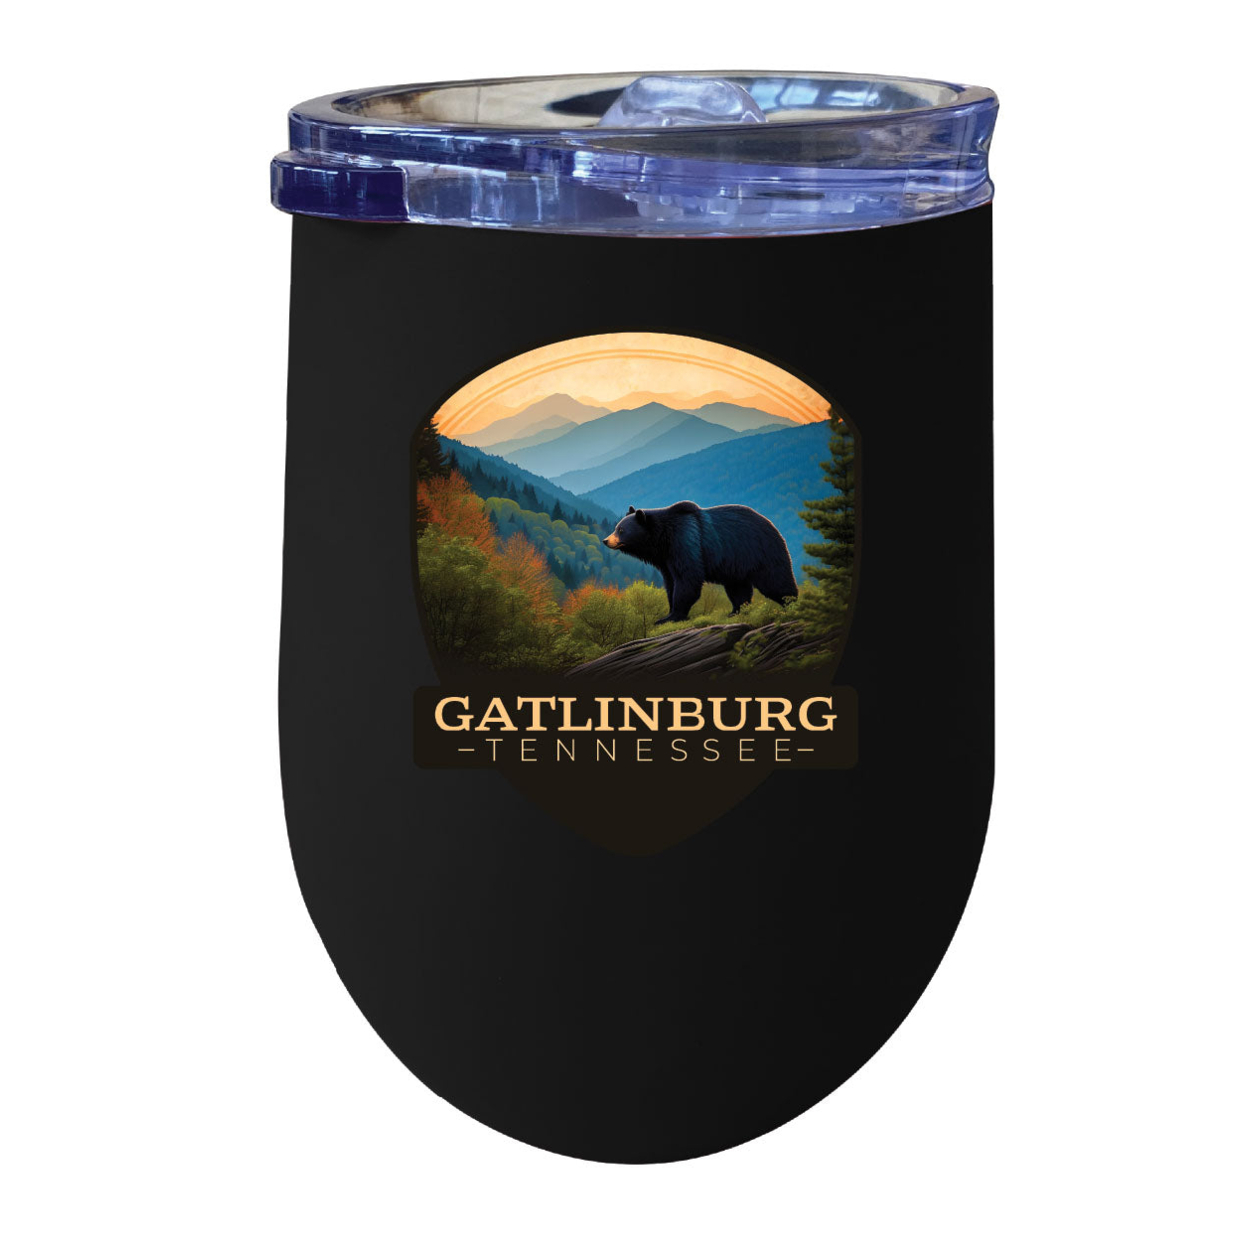 Gatlinburg Tennessee Souvenir 12 Oz Insulated Wine Stainless Steel Tumbler - Black, A